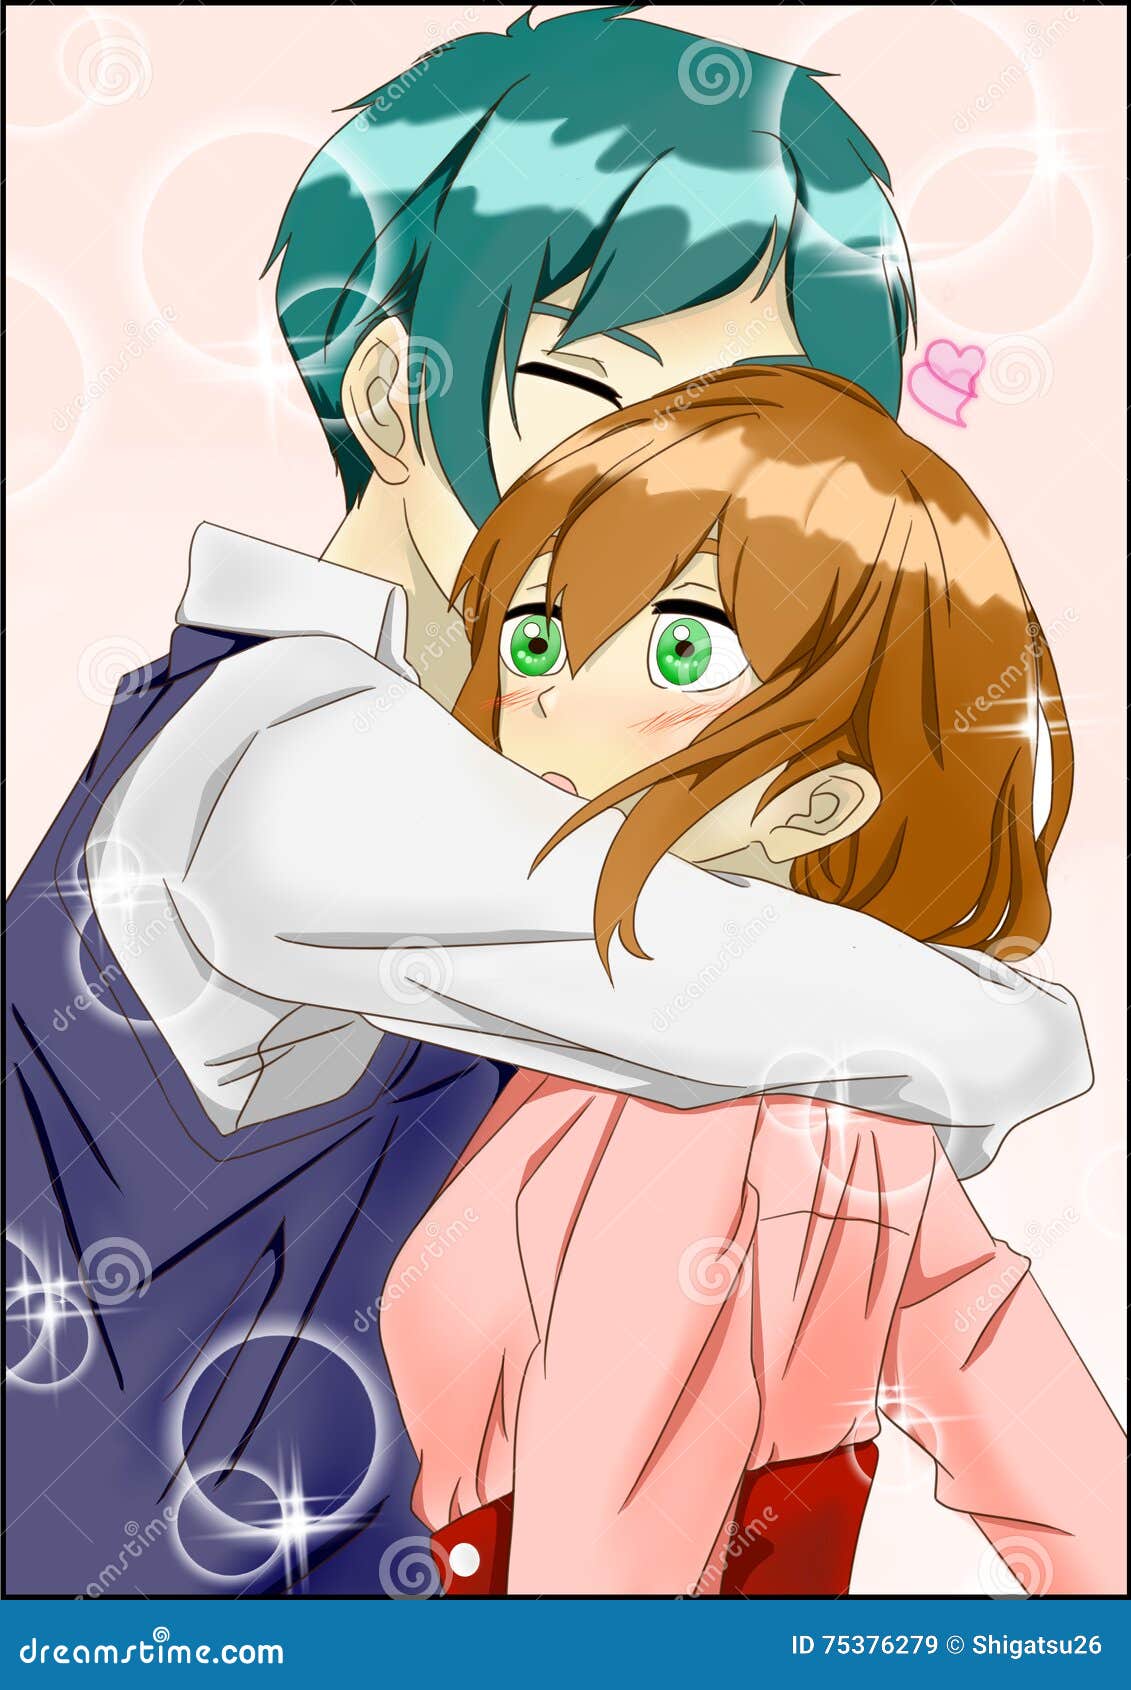 Ita really cute hug  Anime poses reference Chibi sketch Drawing base